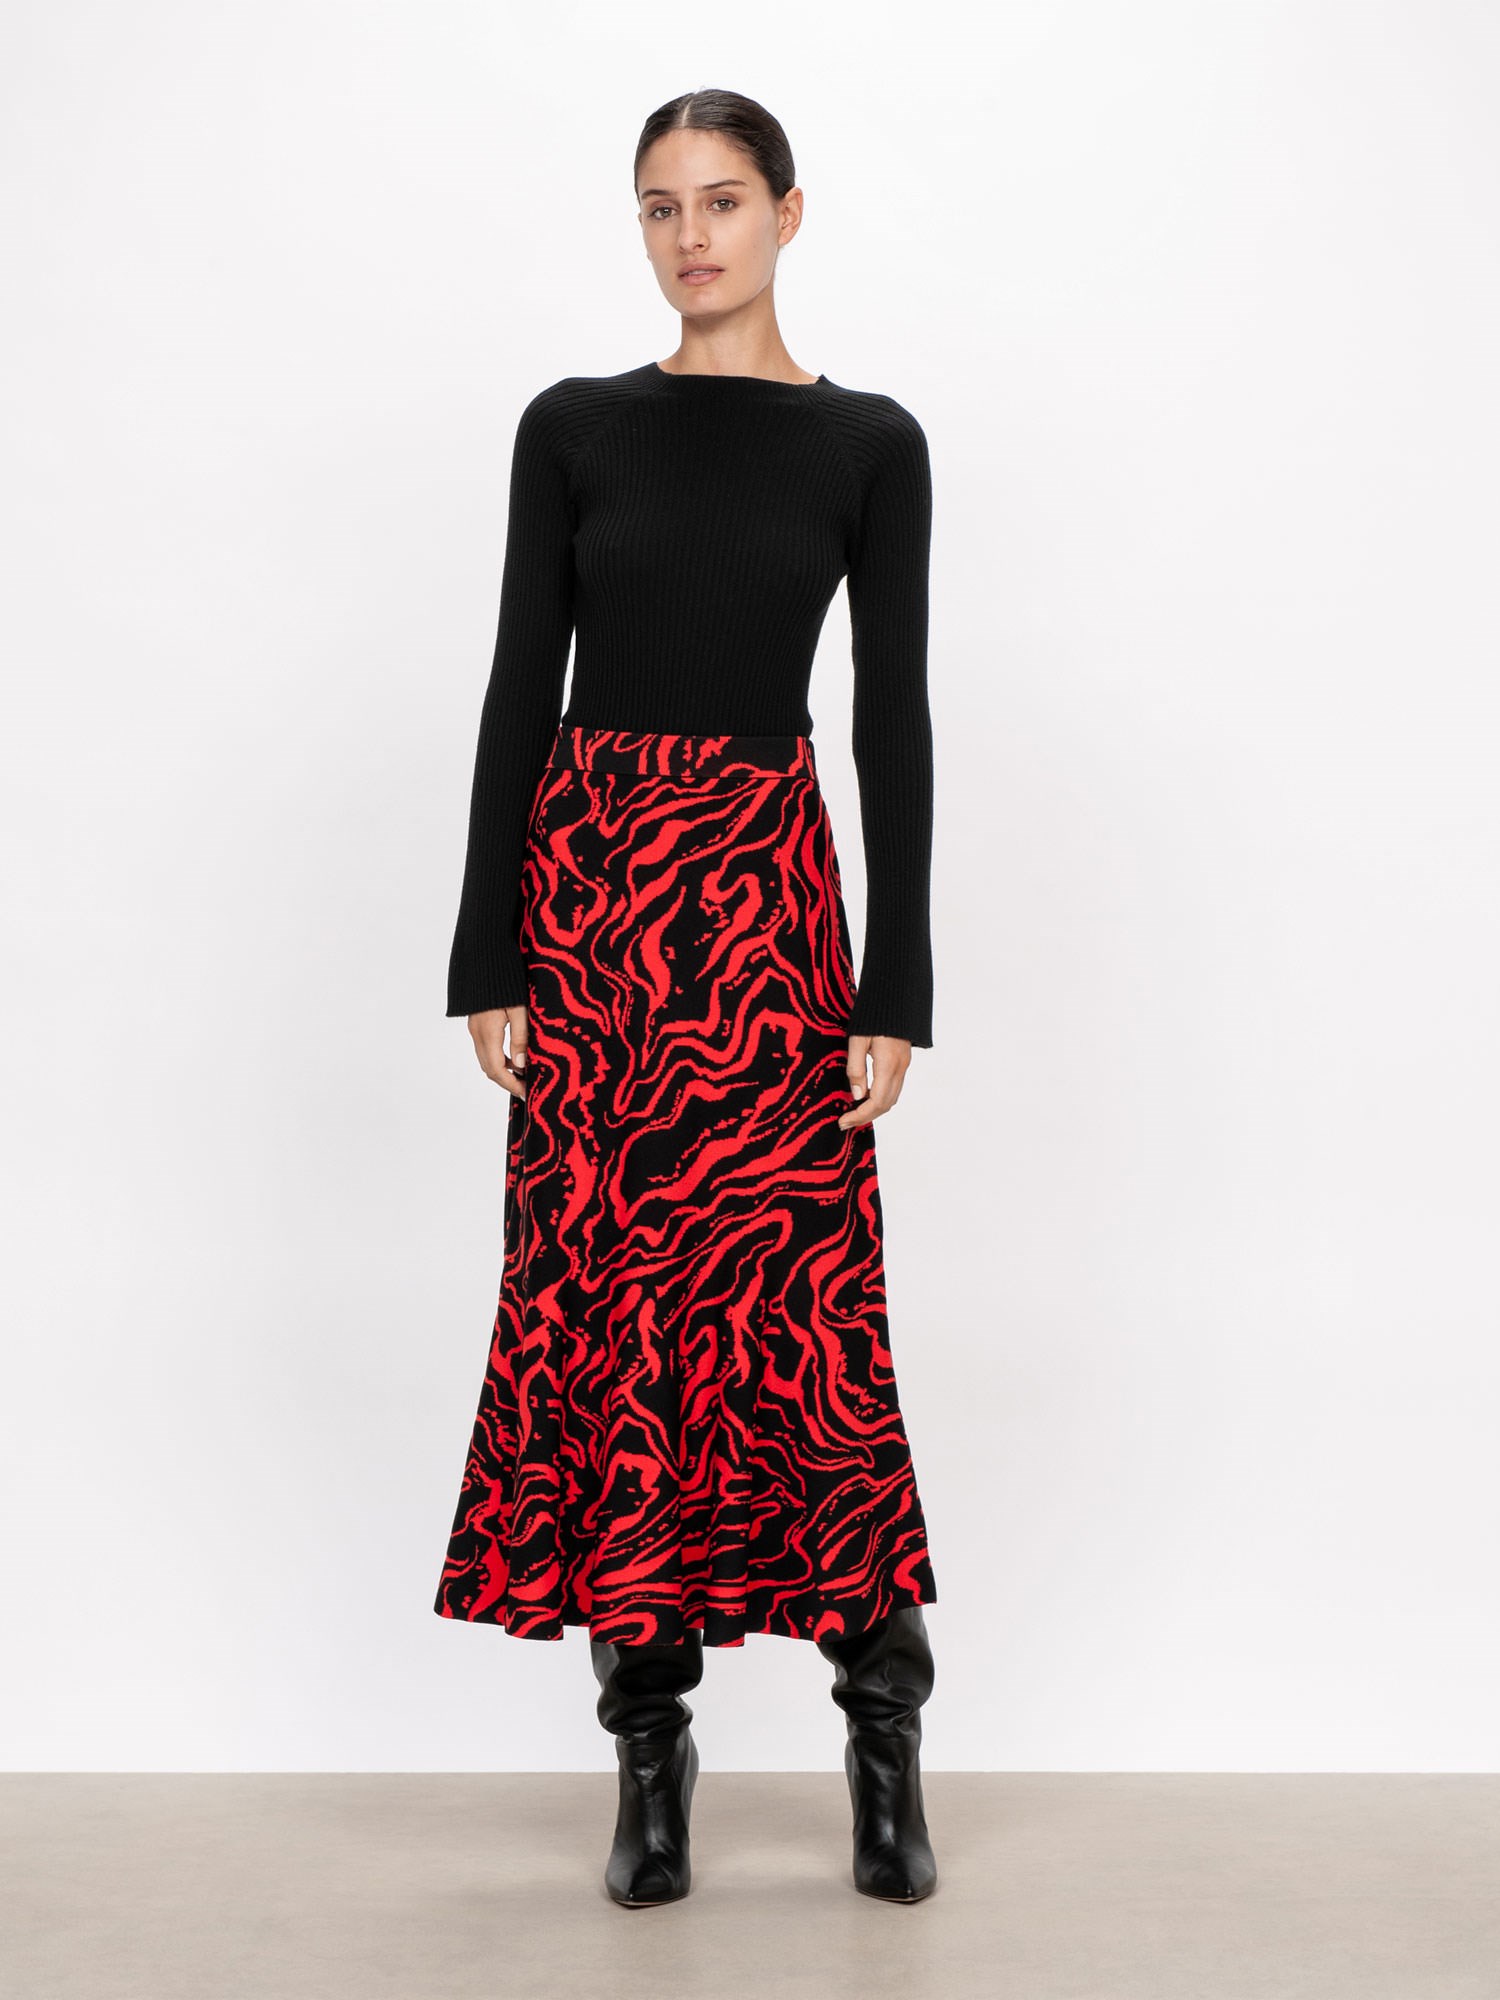 Marble Jacquard Skirt | Buy Skirts Online - Veronika Maine